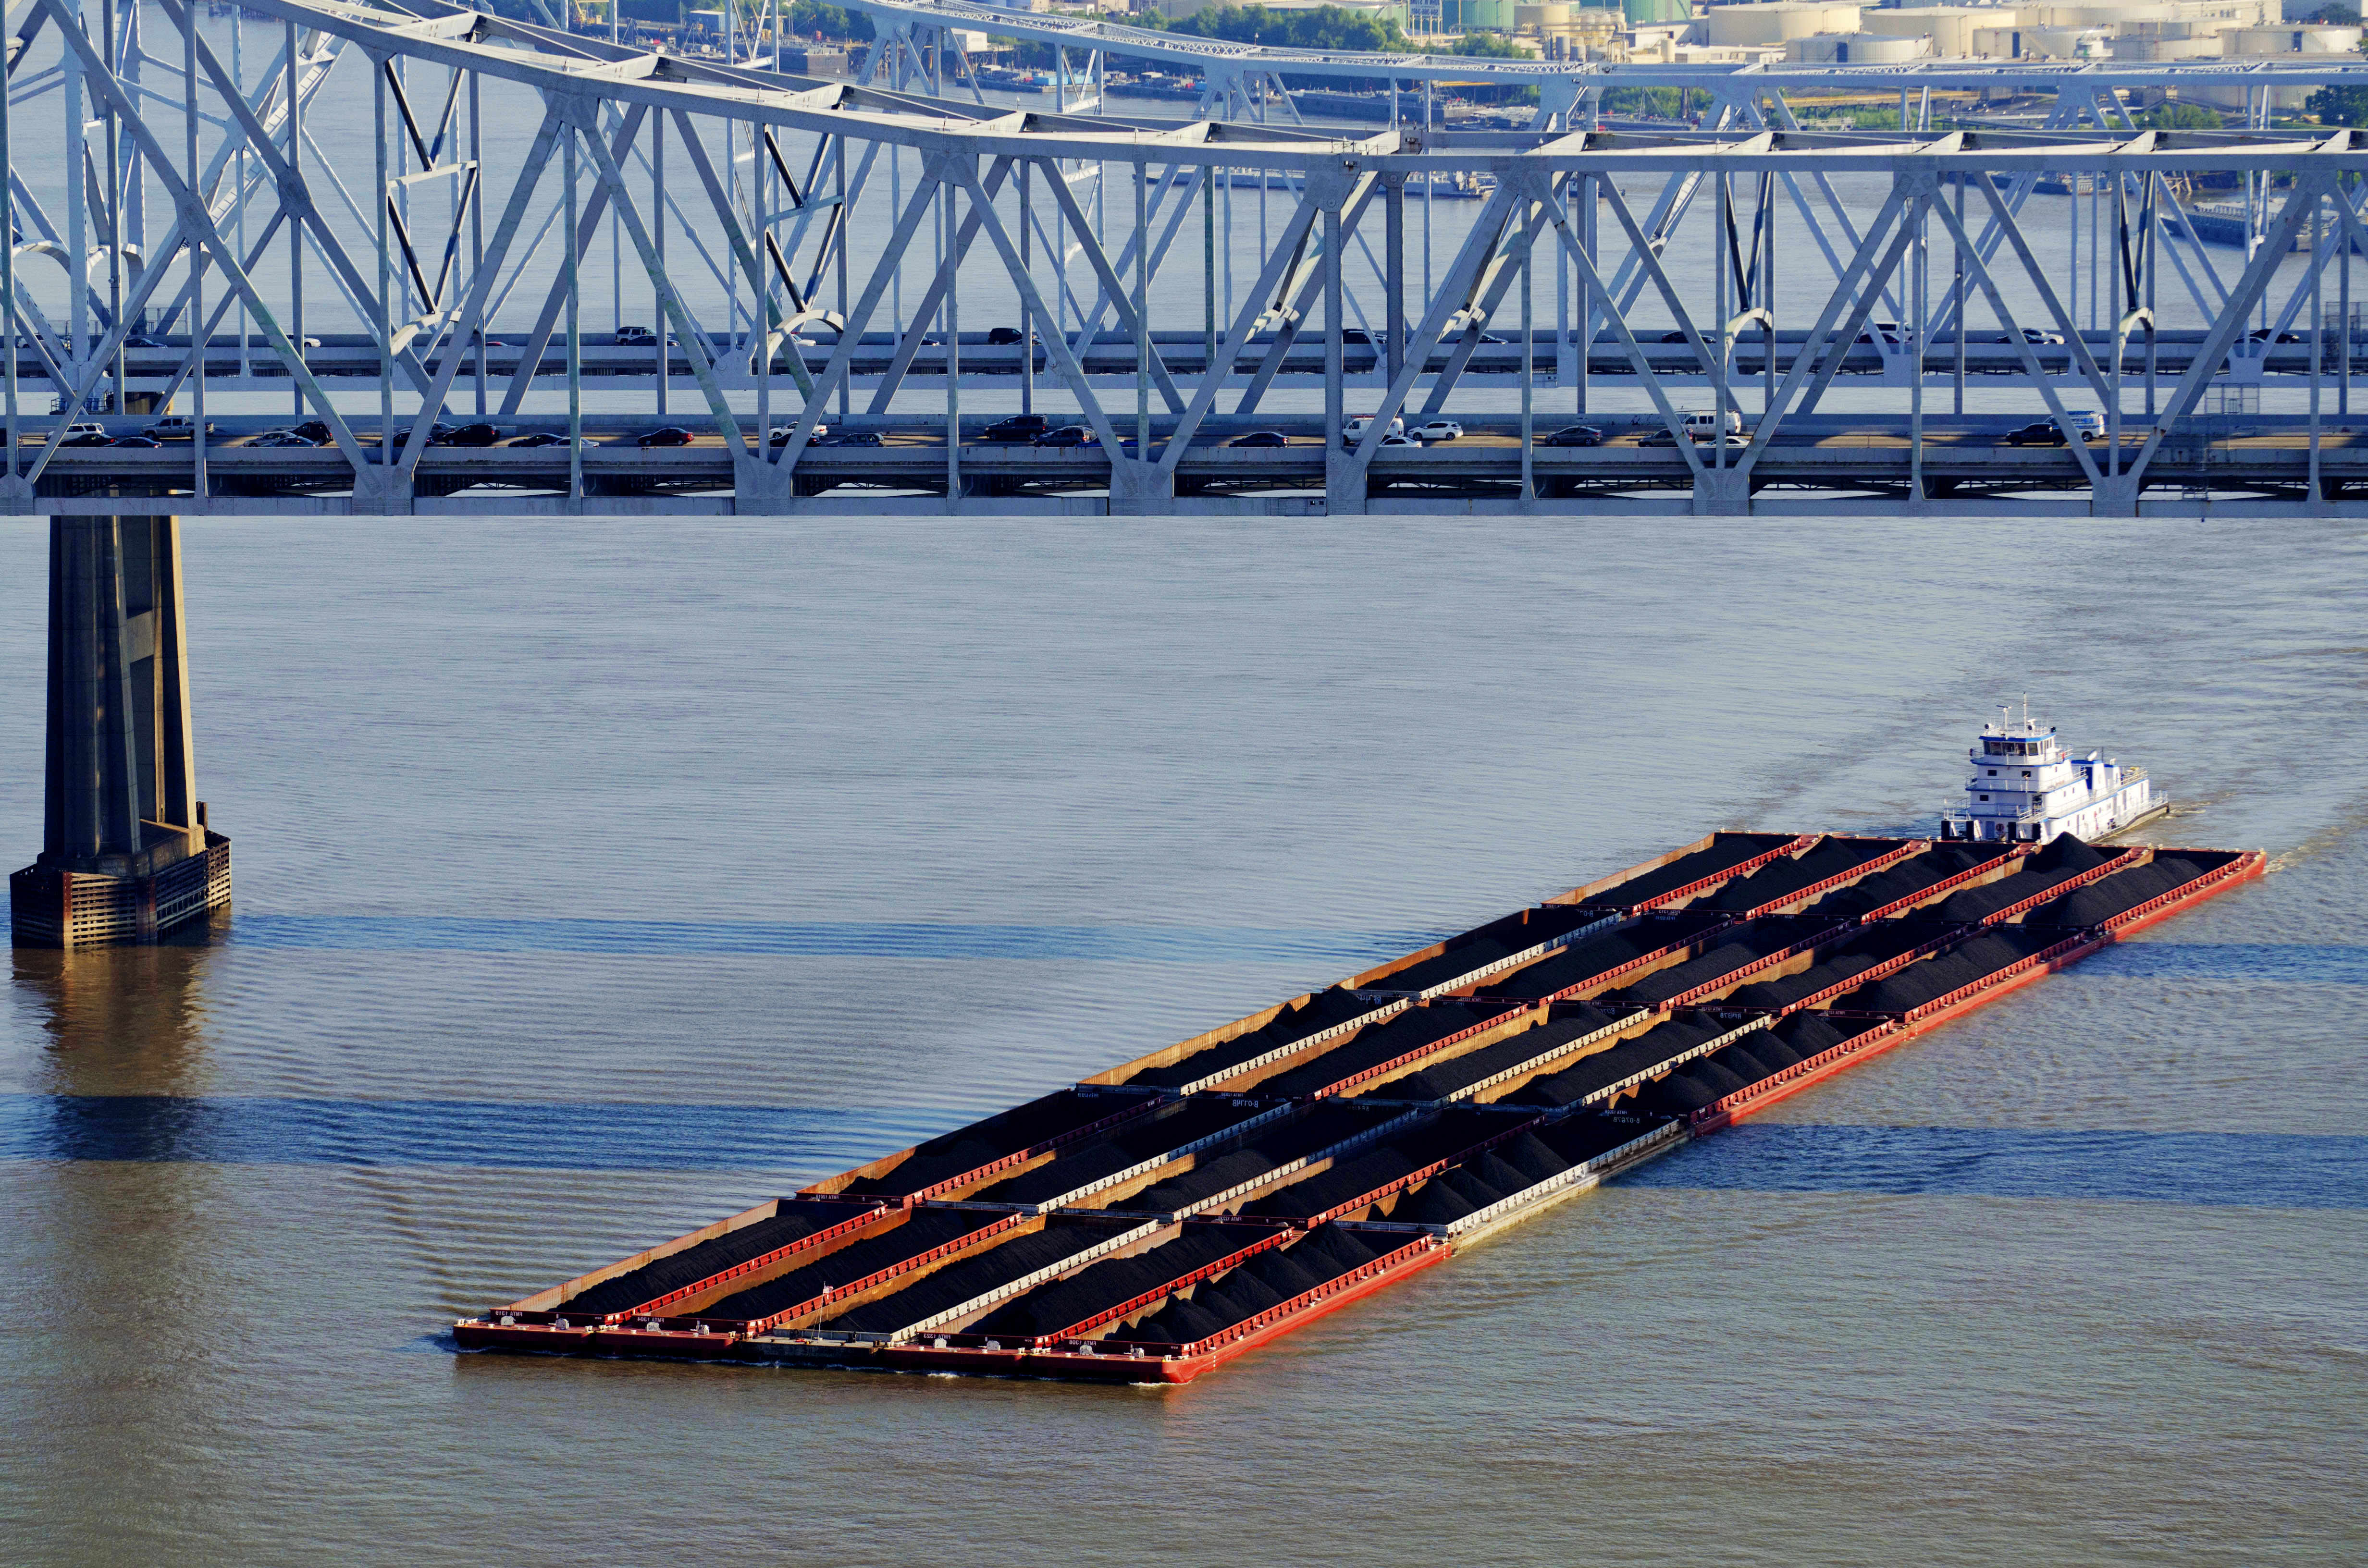 Florida Marine Transporters towboat transporting dry cargo heading under a bridge